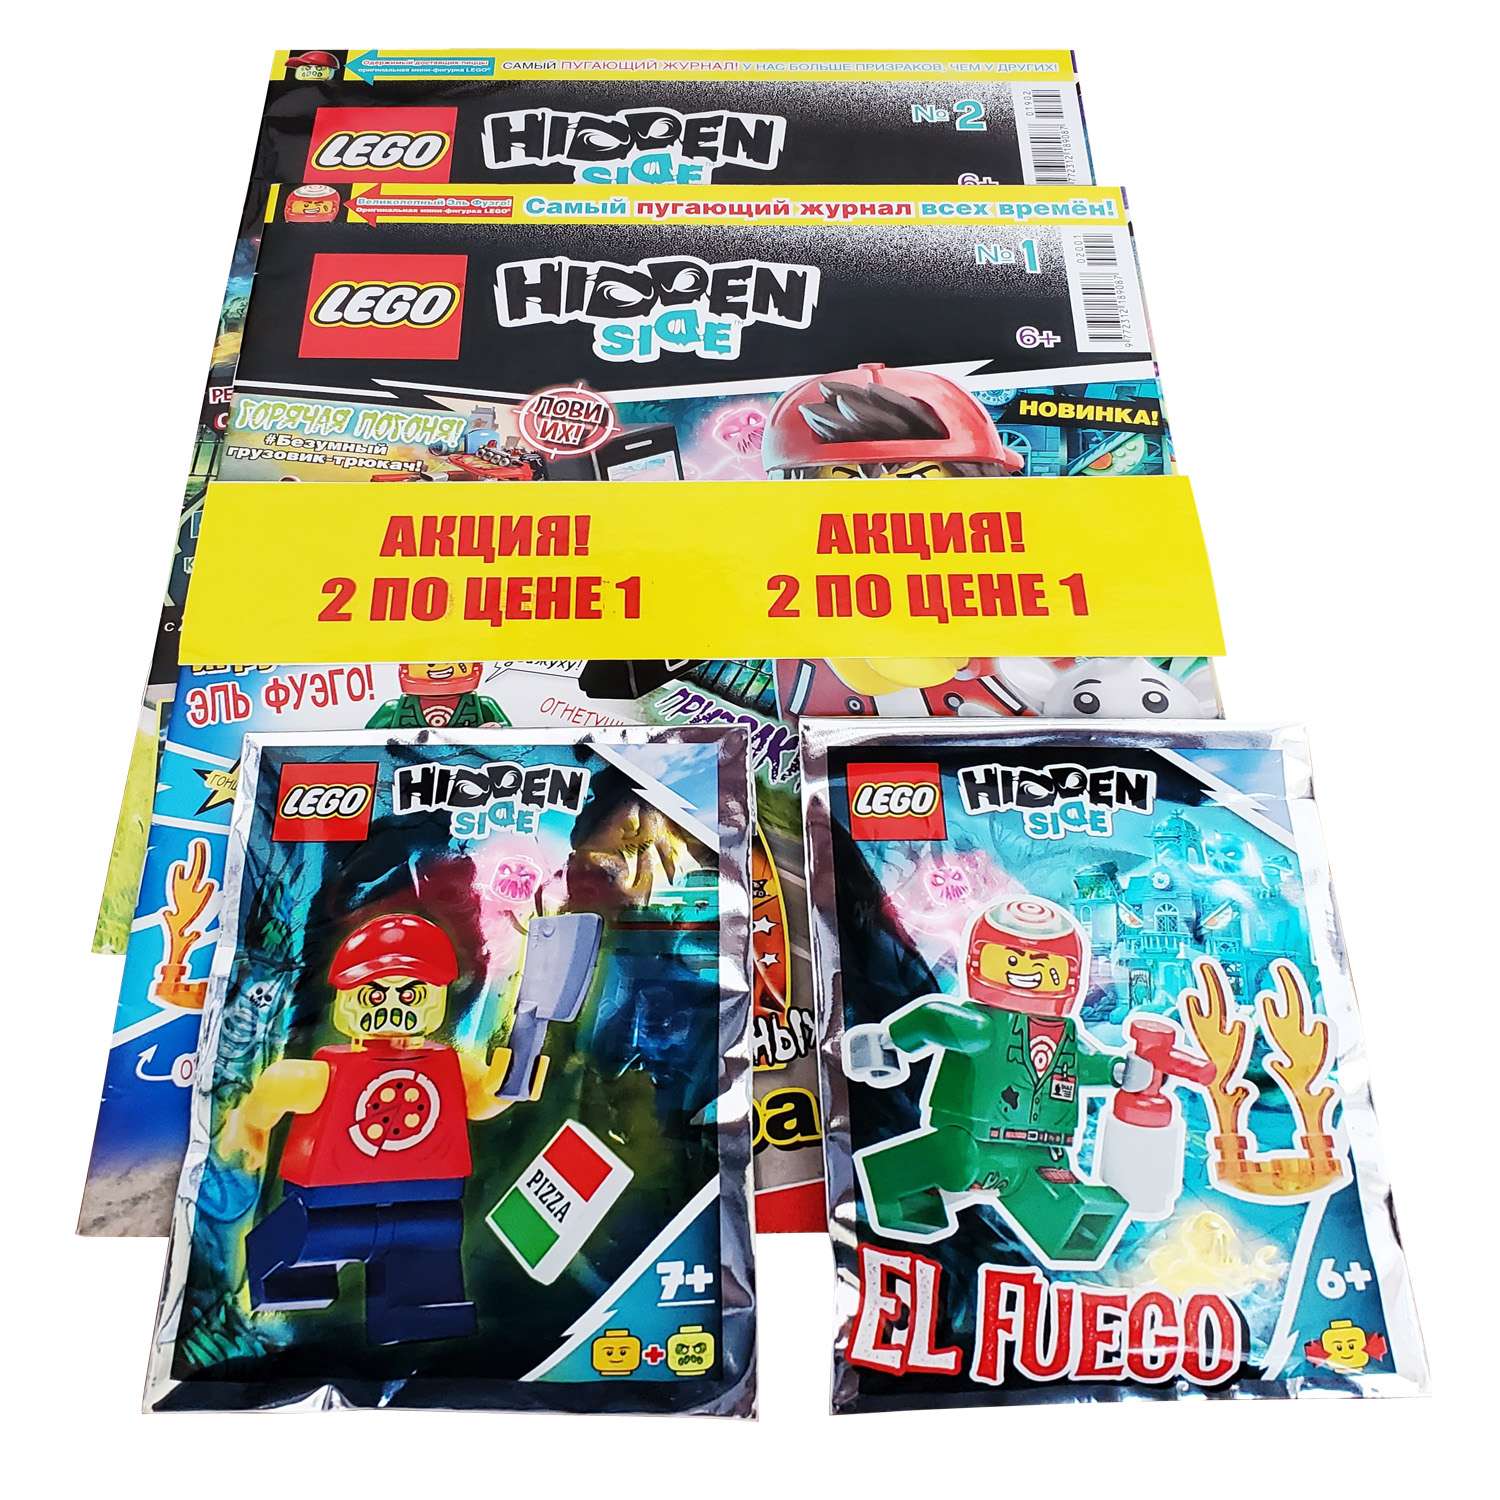 Журнал LEGO Hidden Side 2 по цене 1 - фото 4